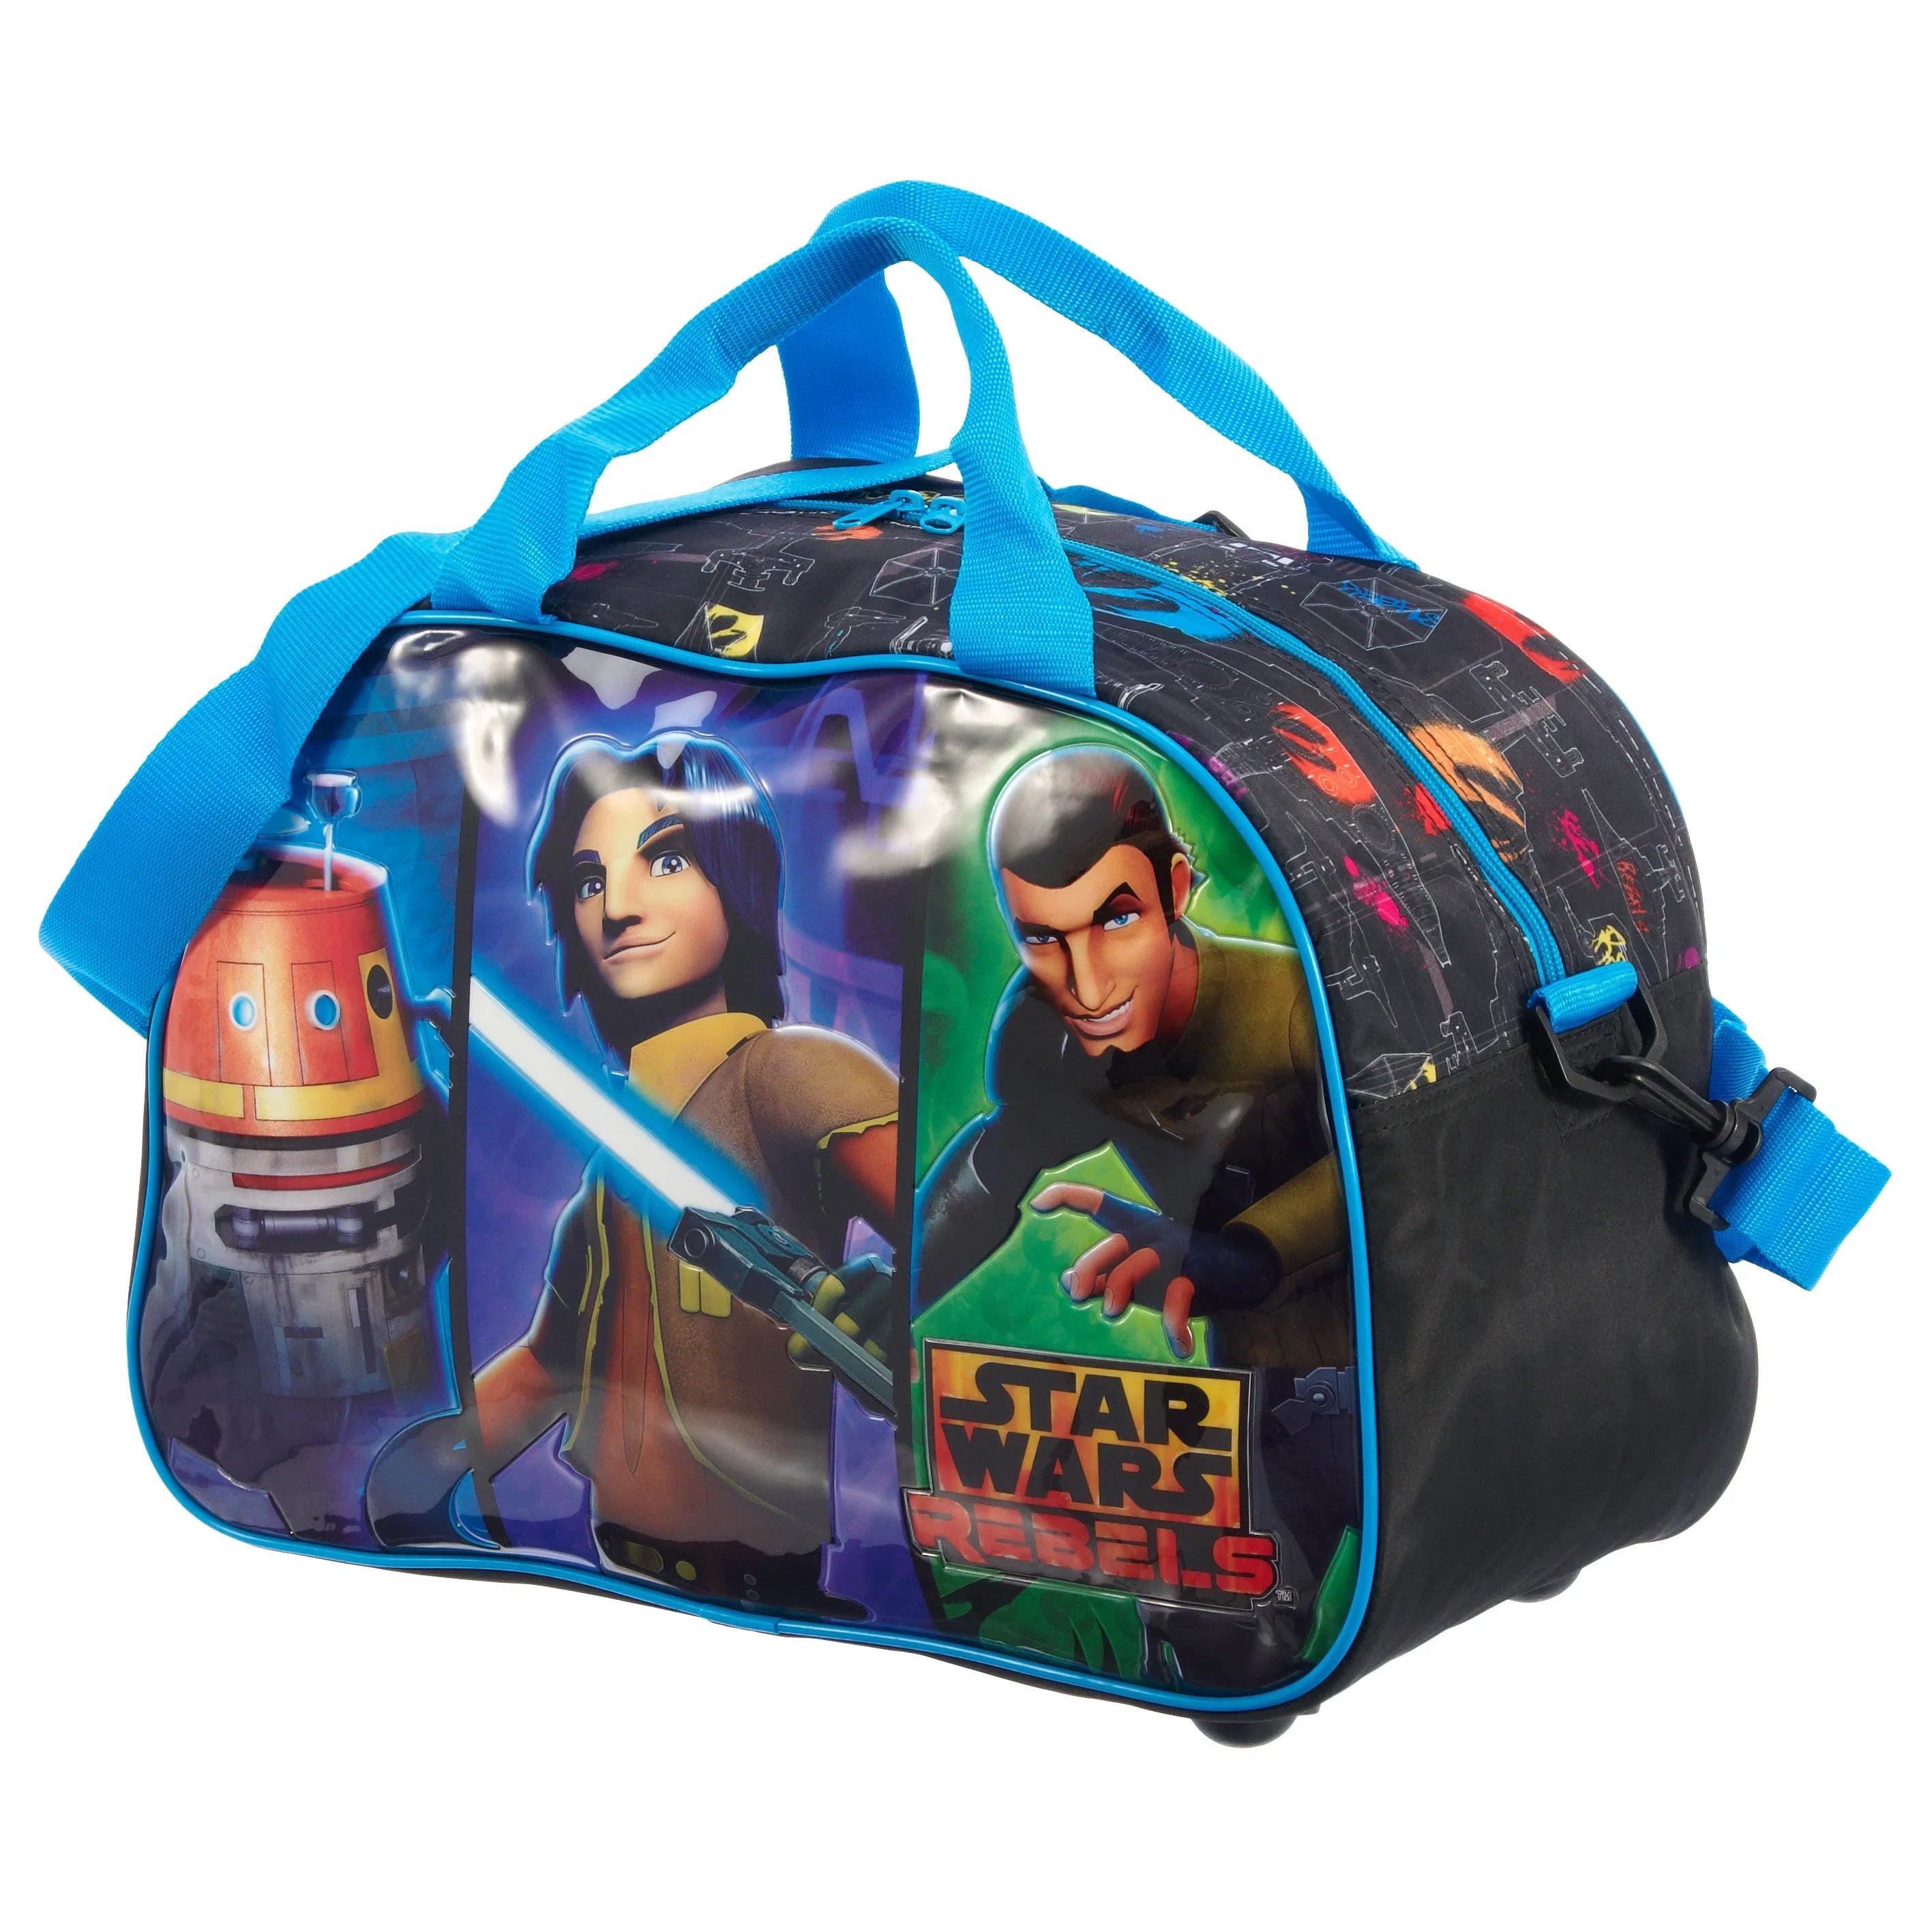 Disney Star Wars Rebels sac de voyage 40 cm - coloré